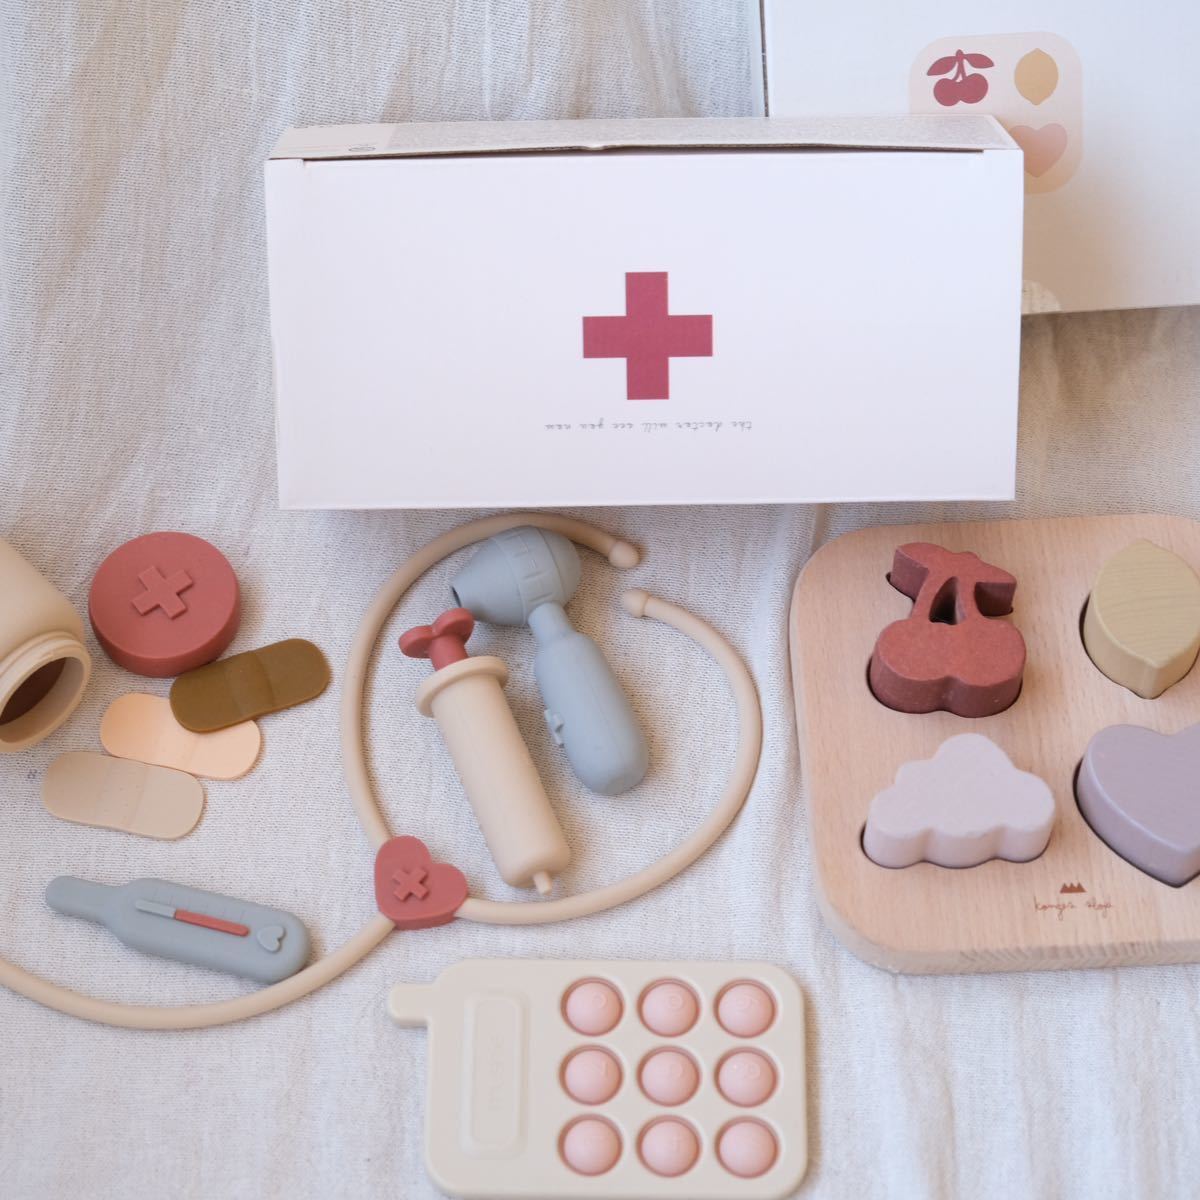 konges sloejd doctor set とpuzzle heart とmushieの Phone Press Toy 3セット